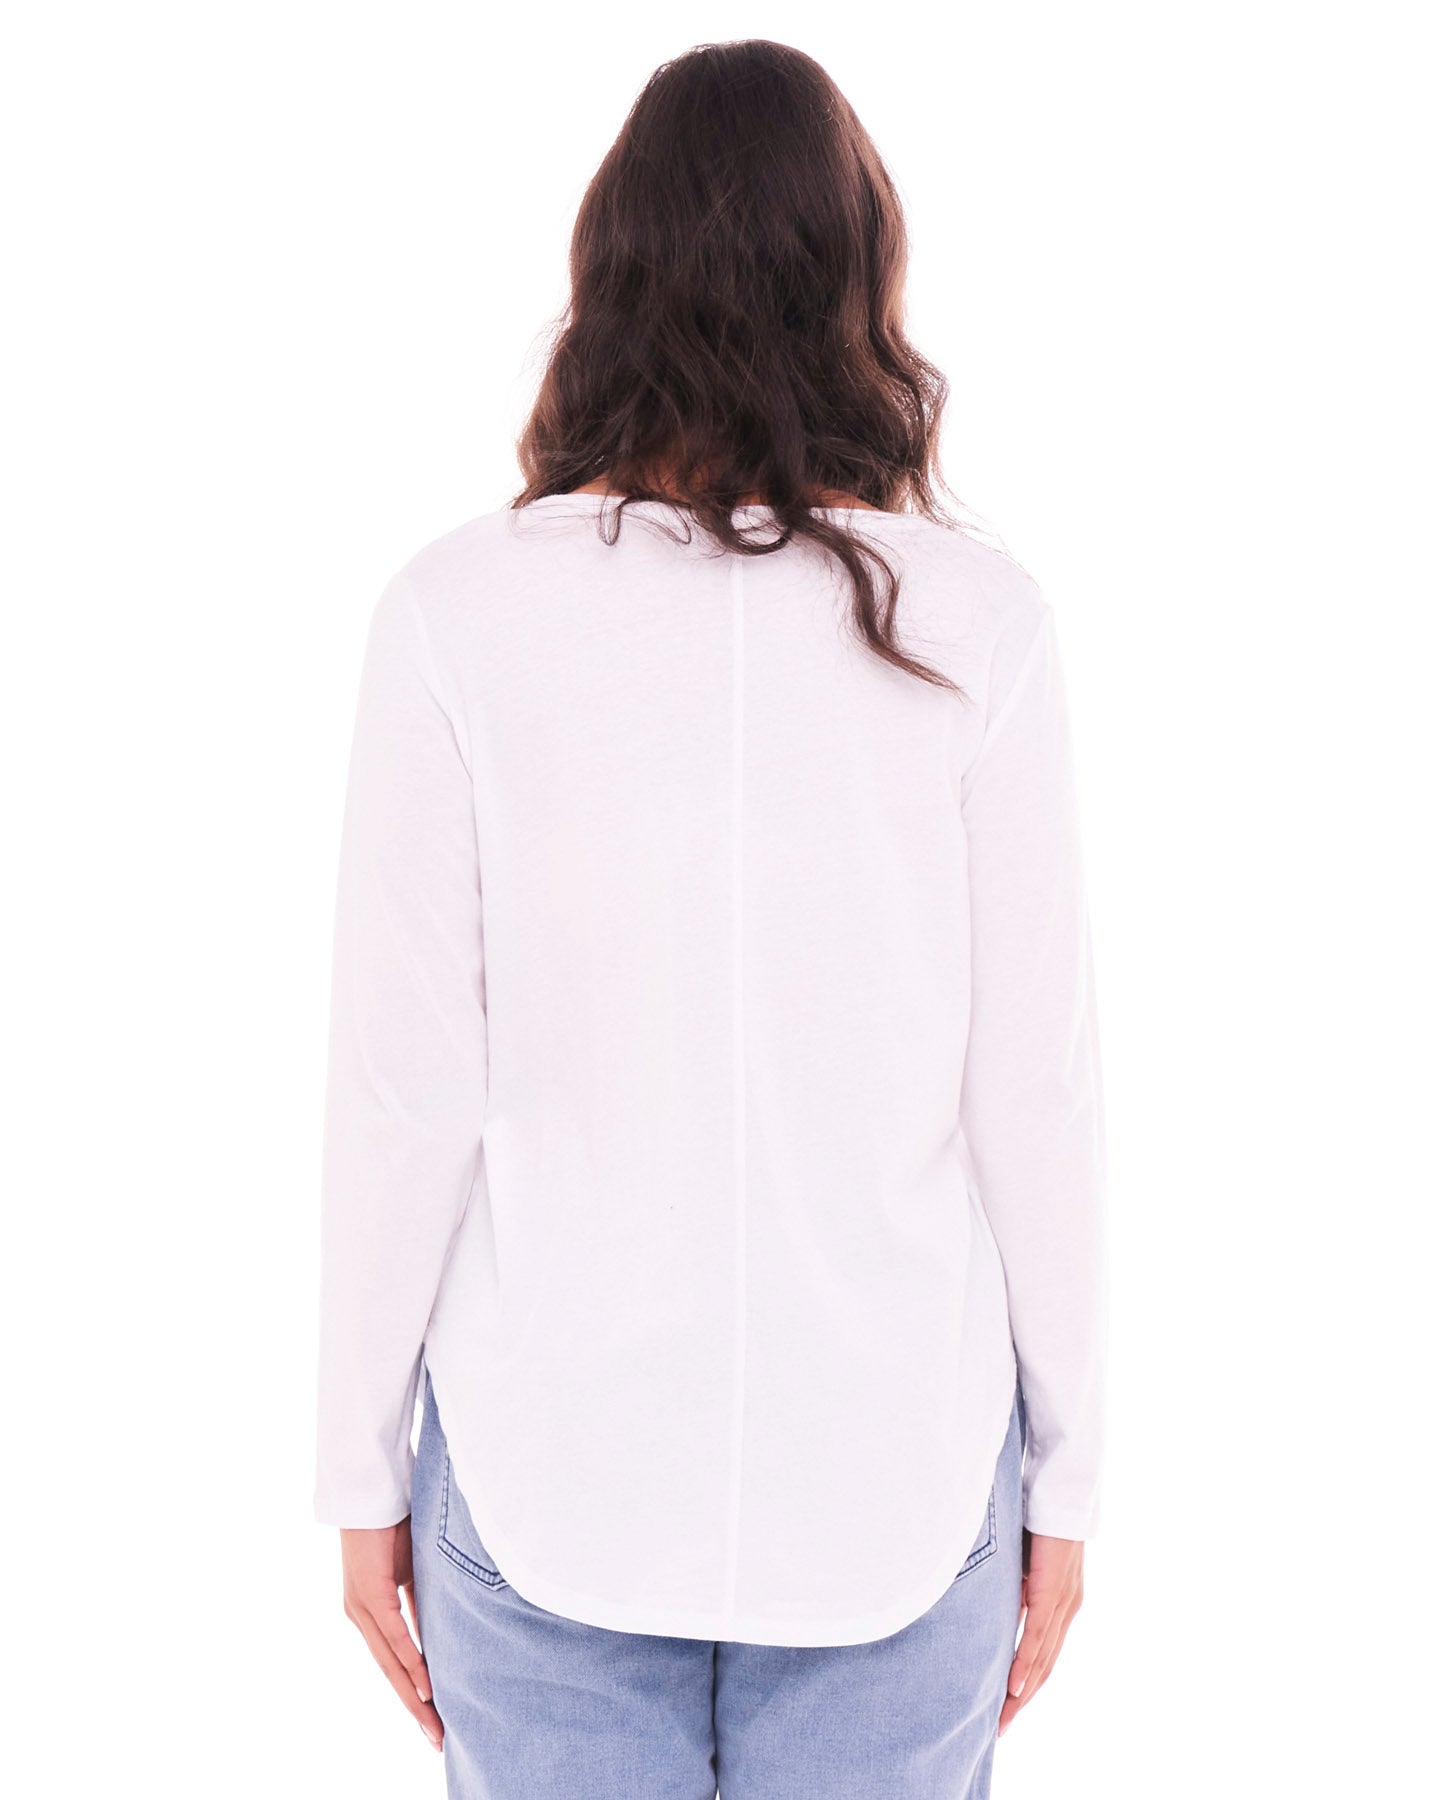 Megan Long Sleeve Cotton Basic Top - White